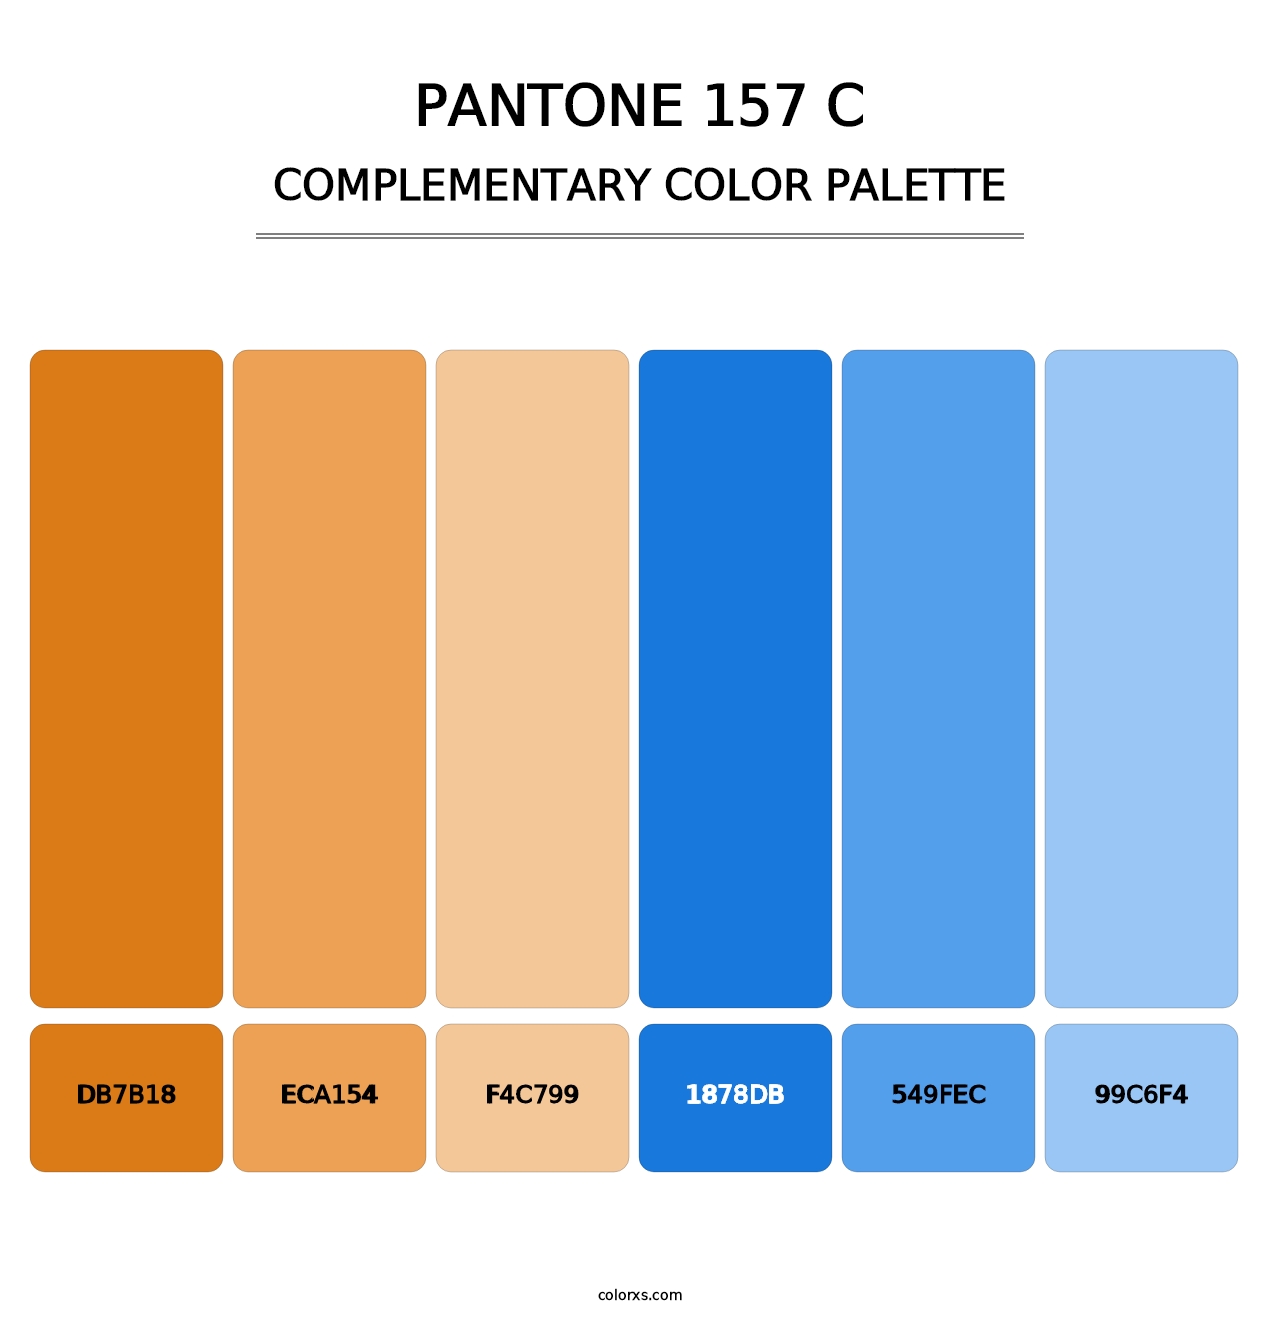 PANTONE 157 C - Complementary Color Palette